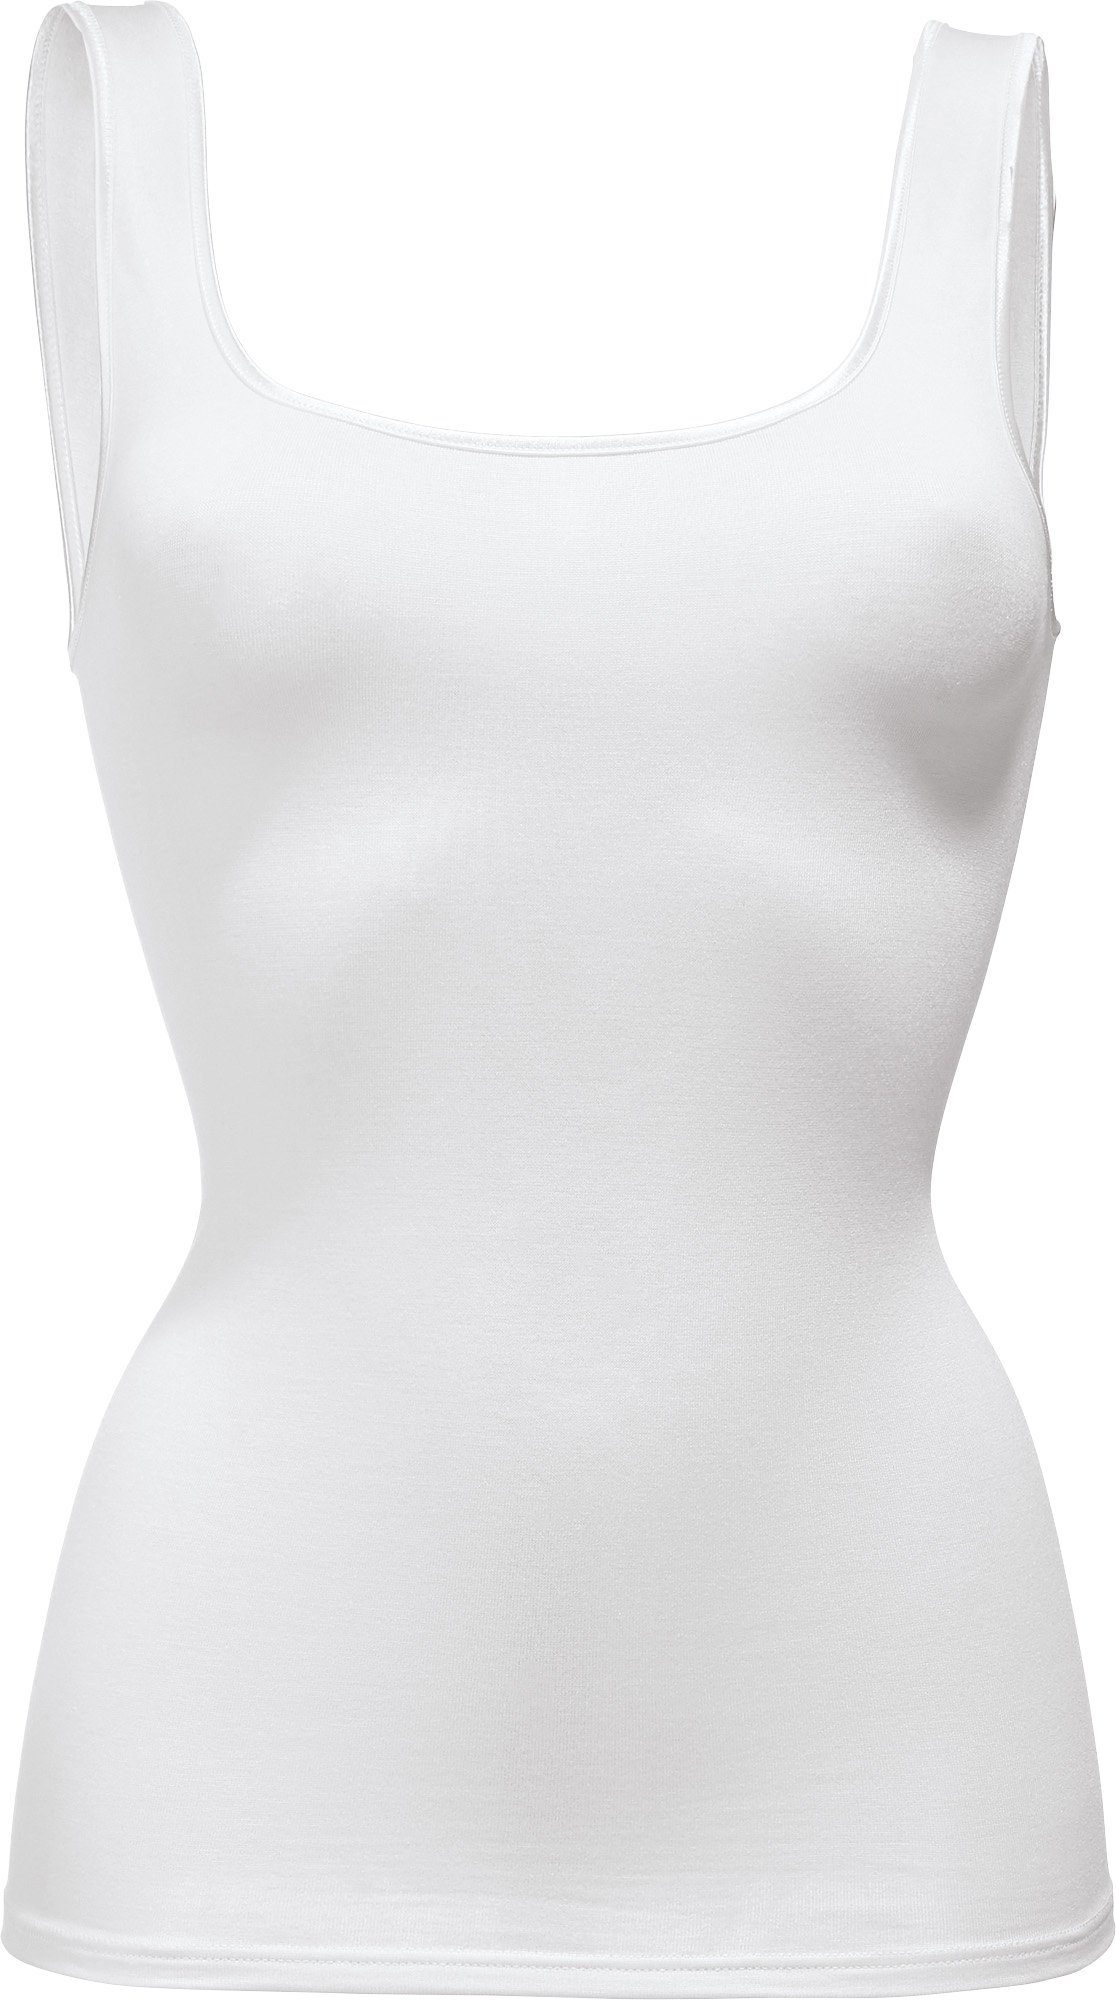 Pompadour Unterhemd Damen-Unterhemd Modal Uni weiß